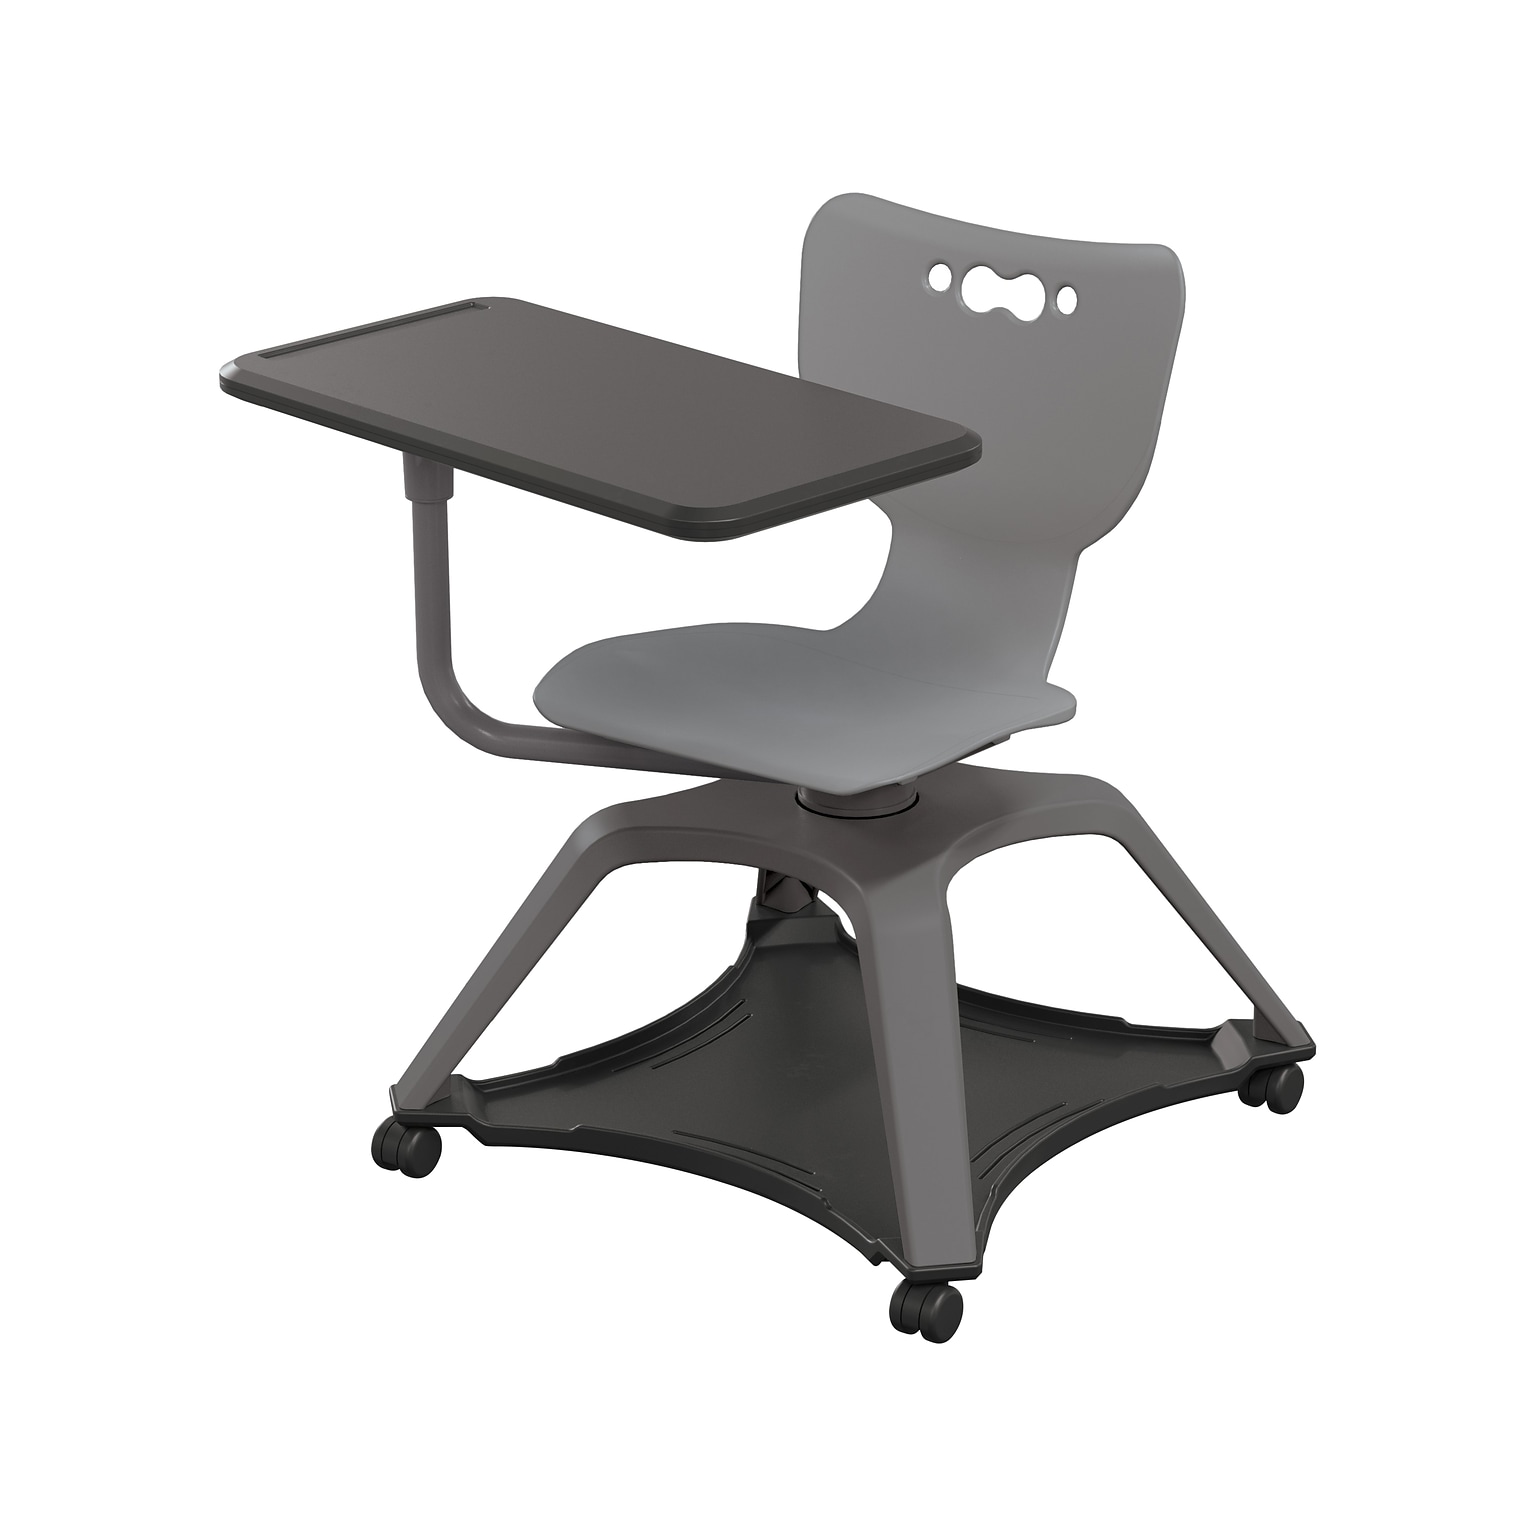 MooreCo Hierarchy Enroll Polypropylene School Chair, Cool Gray (54325-Gray-NA-TN-SC)